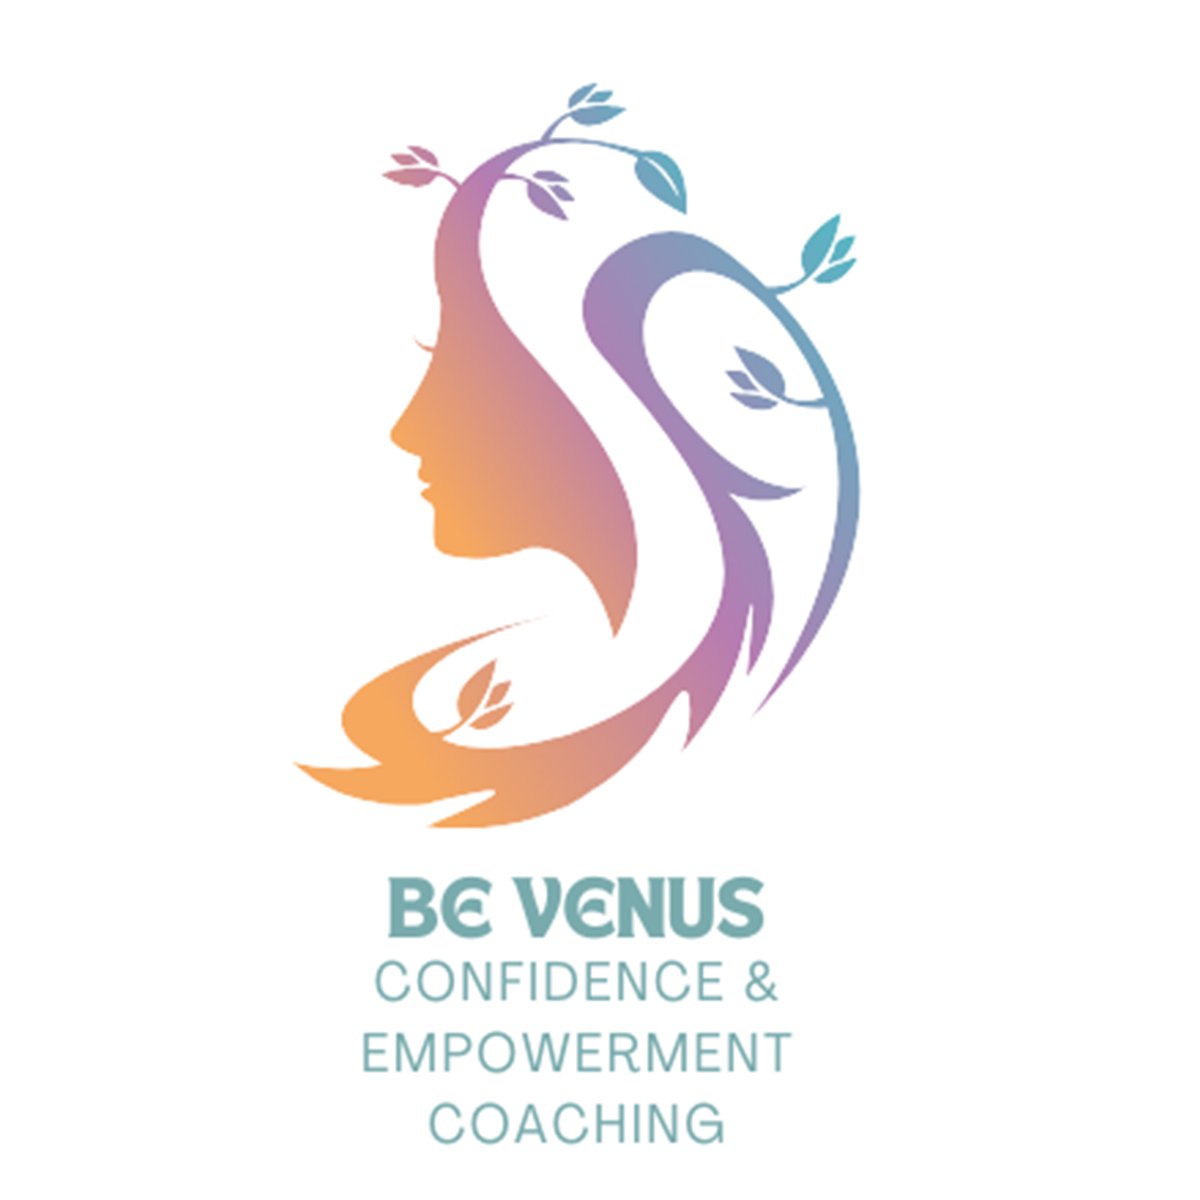 Be Venus square.jpg